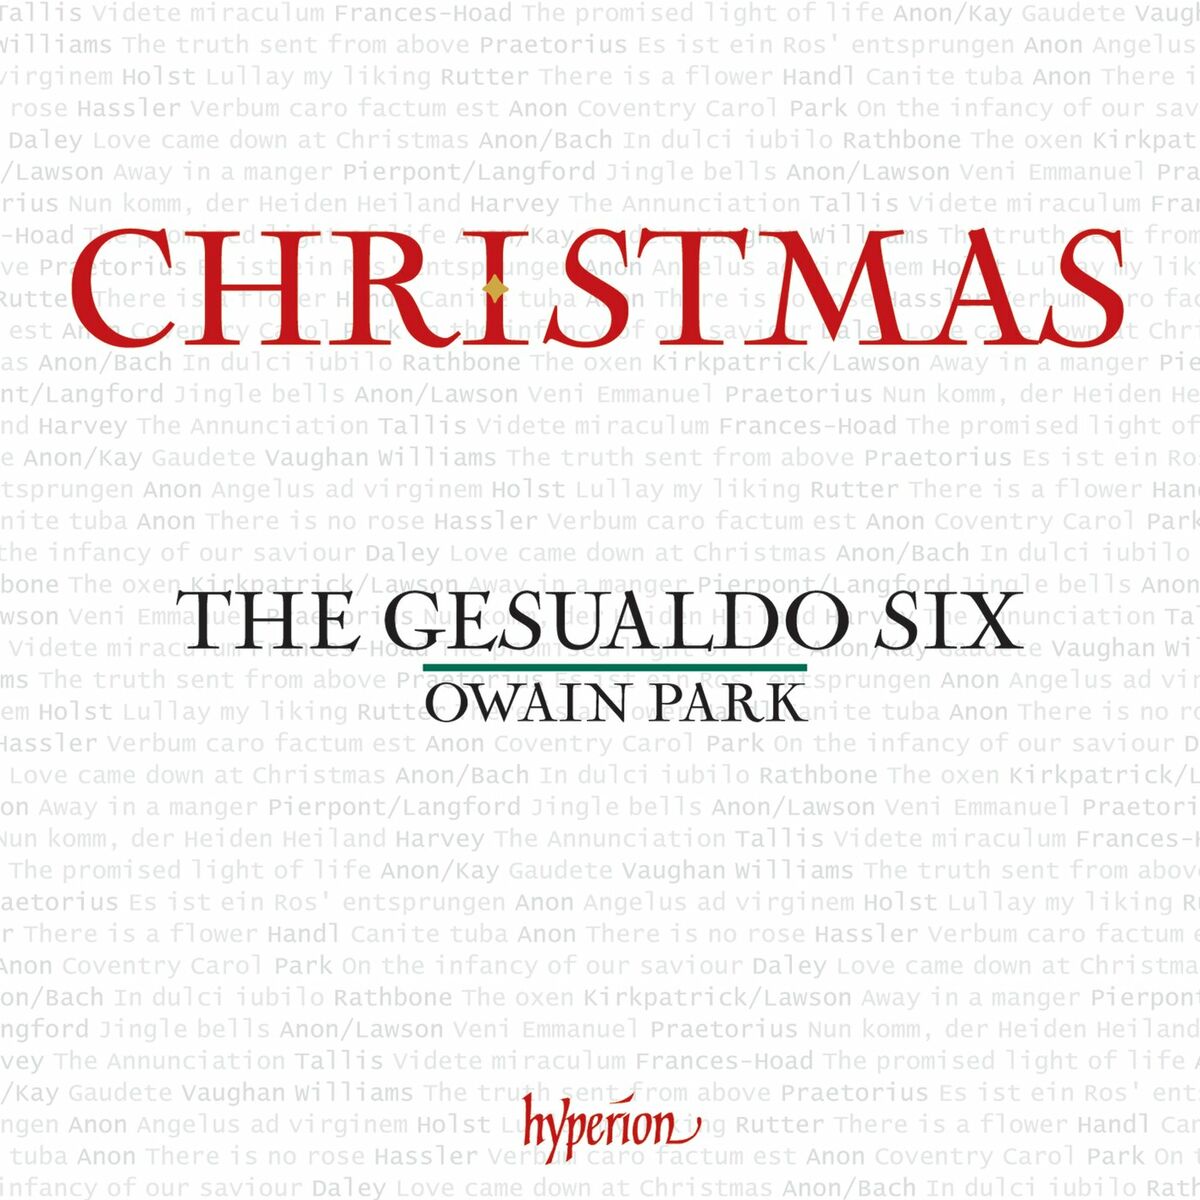 The Gesualdo Six - 2019 - Christmas (A Cappella Carols and Hymns)